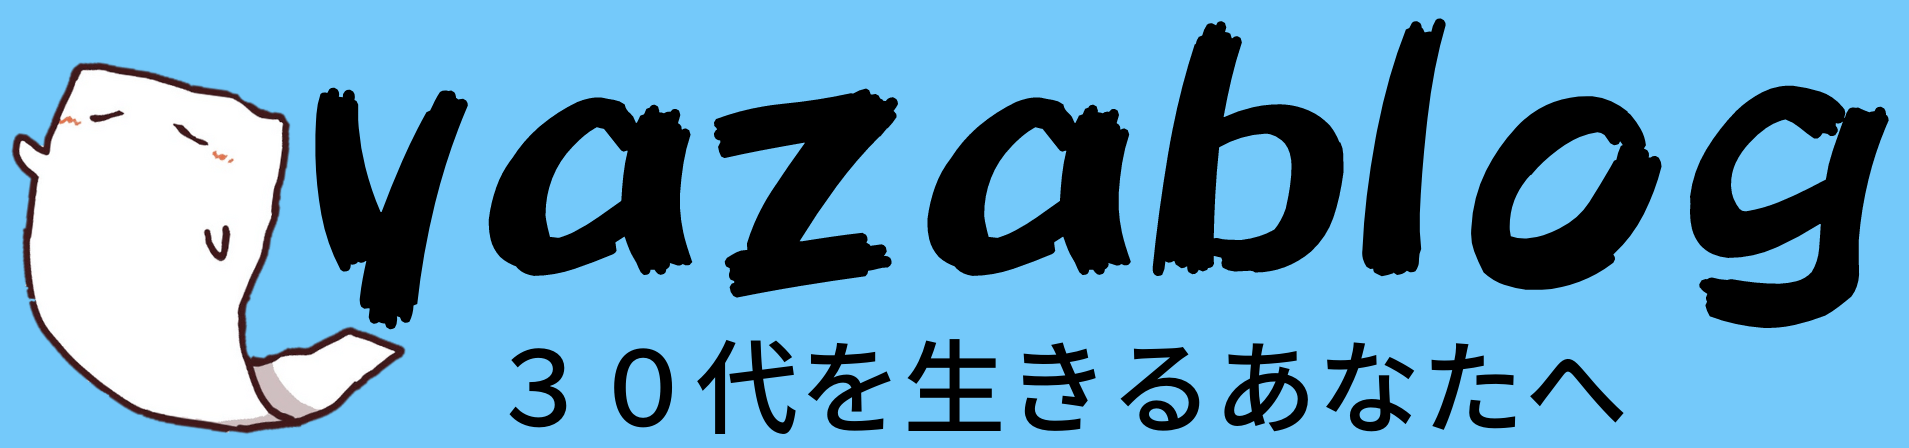 yazablog(やざブログ)